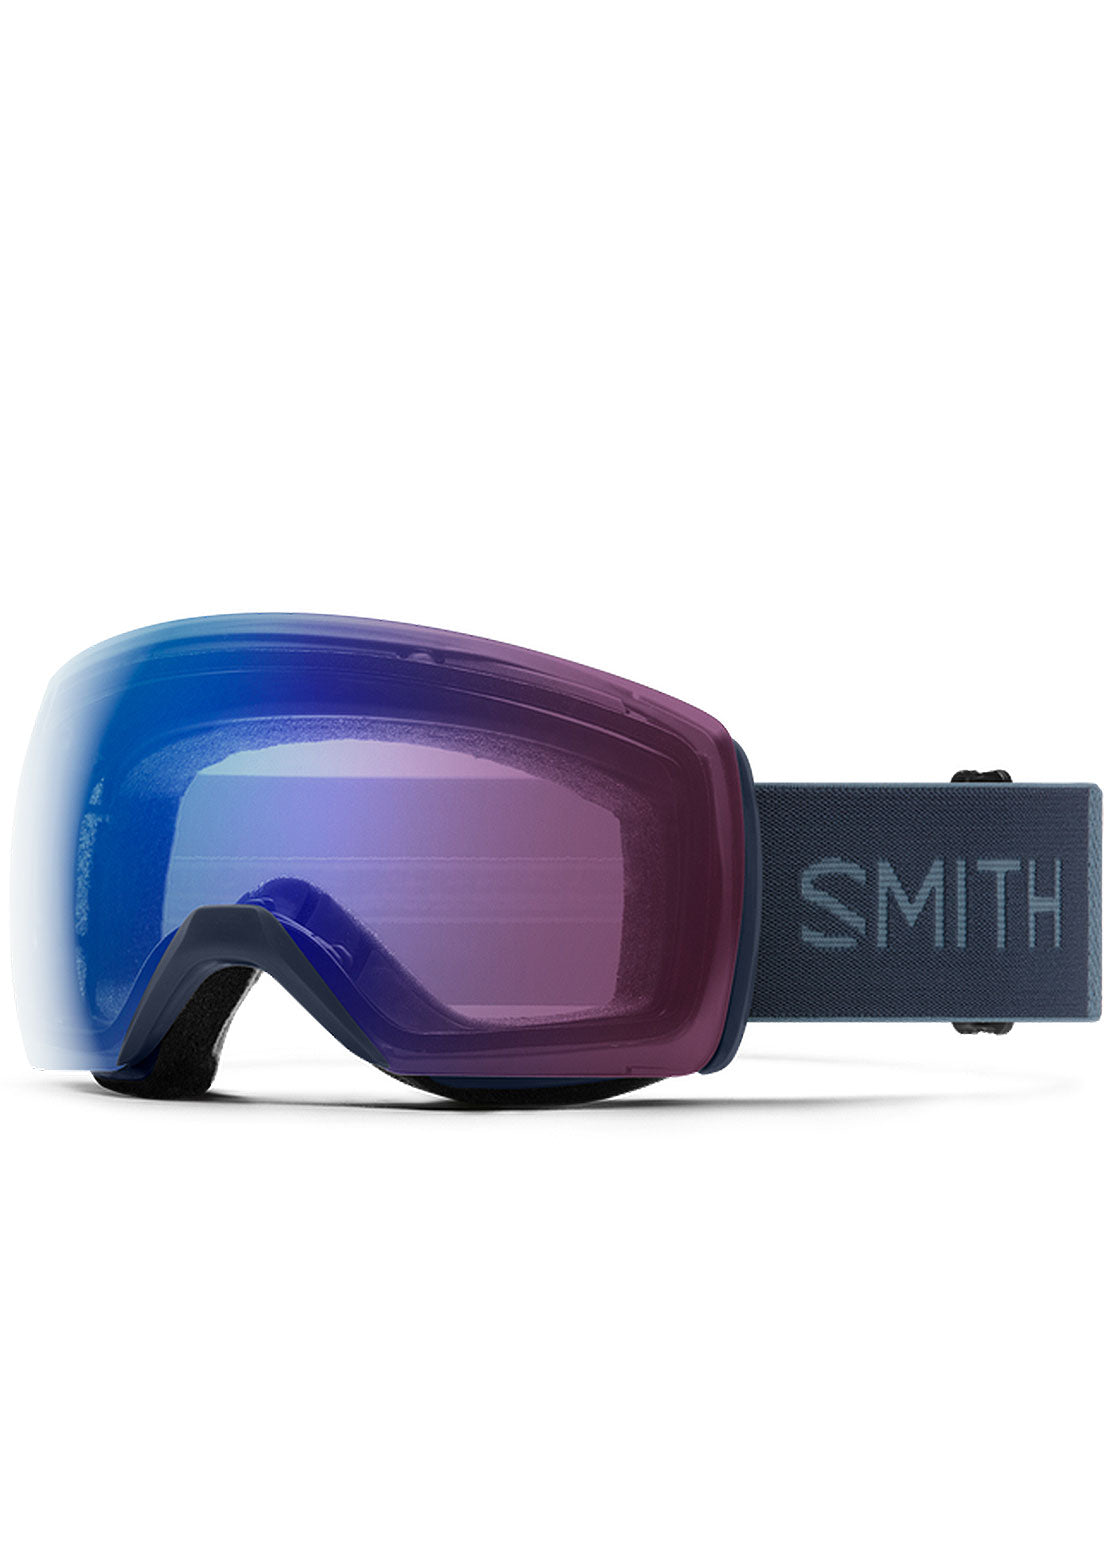 Smith Skyline XL Goggles French Navy/ChromaPop Photochromic Rose Flash